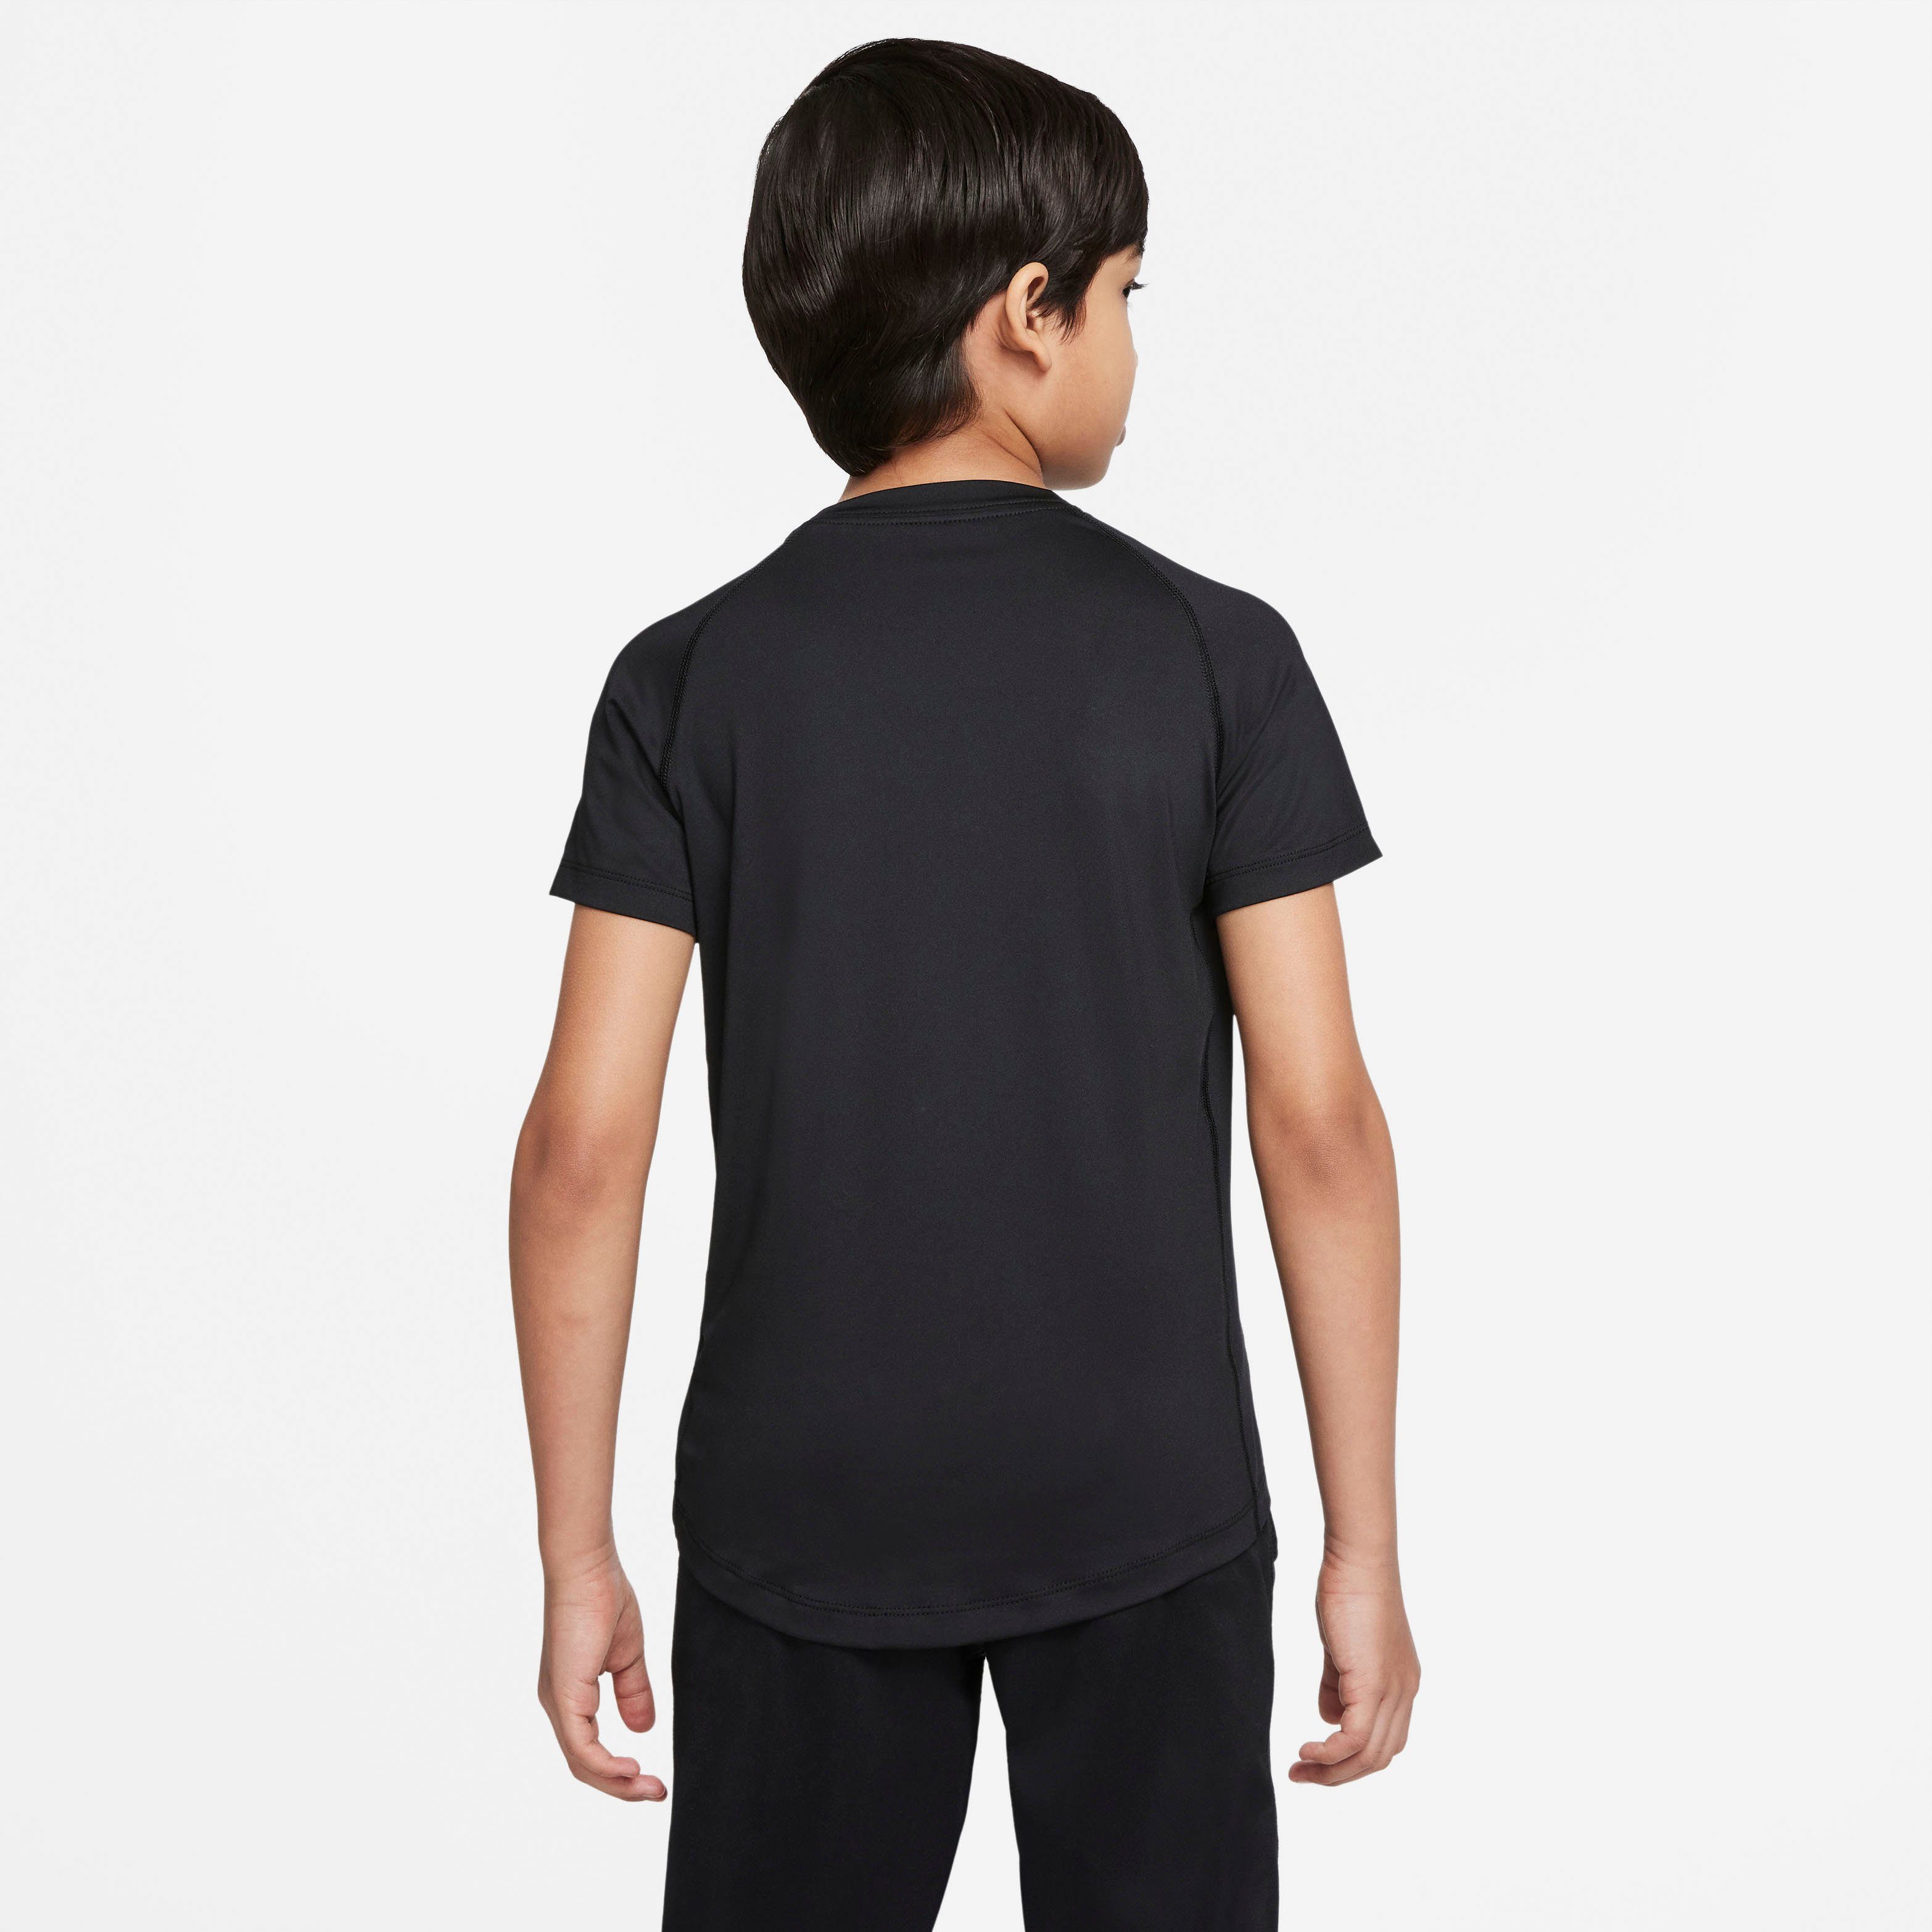 Big Pro Nike Top (Boys) Dri-FIT Short-Sleeve Kids' T-Shirt